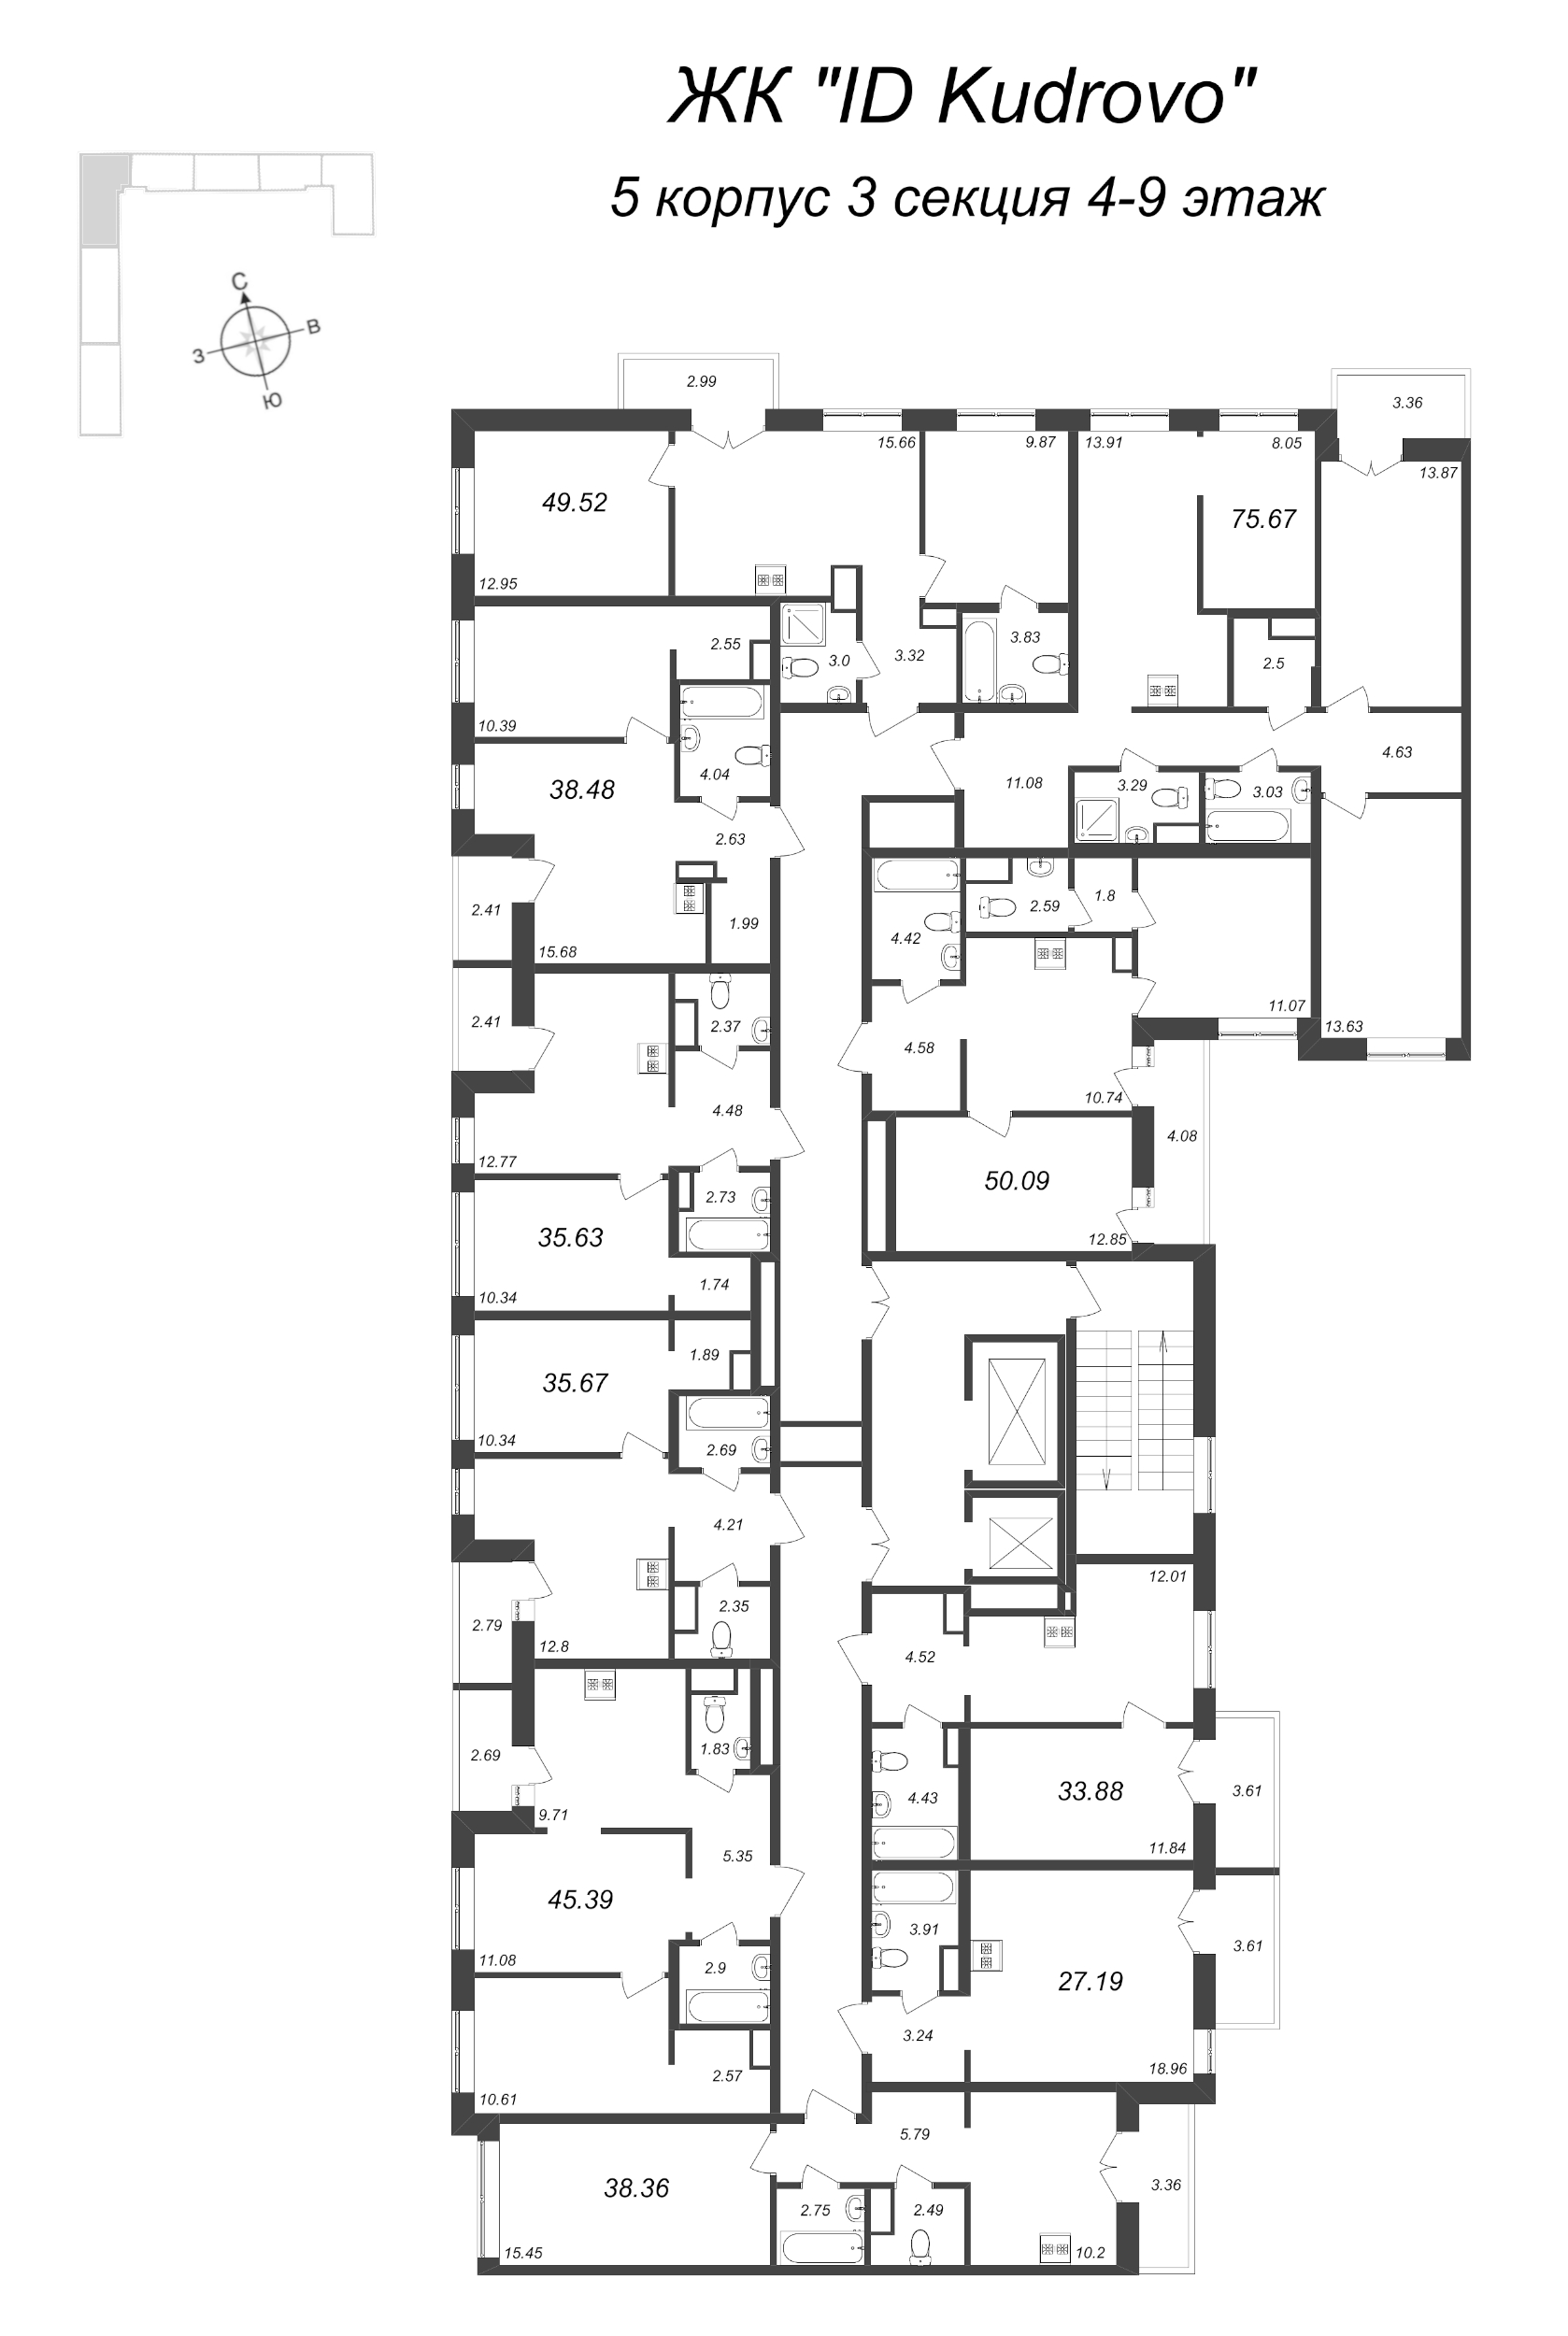 3-комнатная квартира, 75.67 м² в ЖК "ID Kudrovo" - планировка этажа